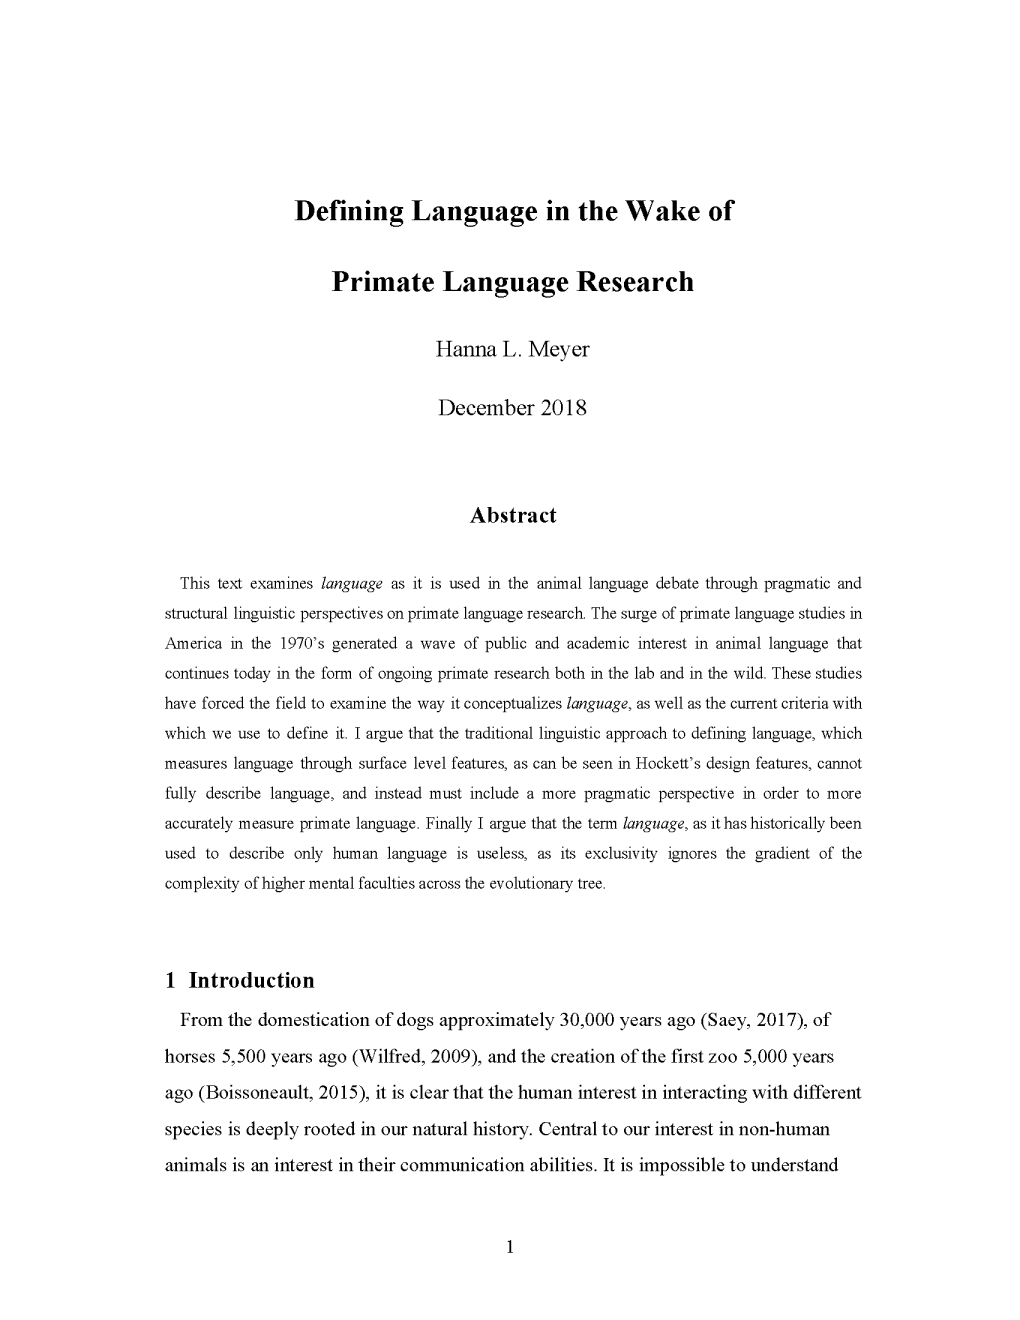 Defining Language in the Wake of Primate Language Research